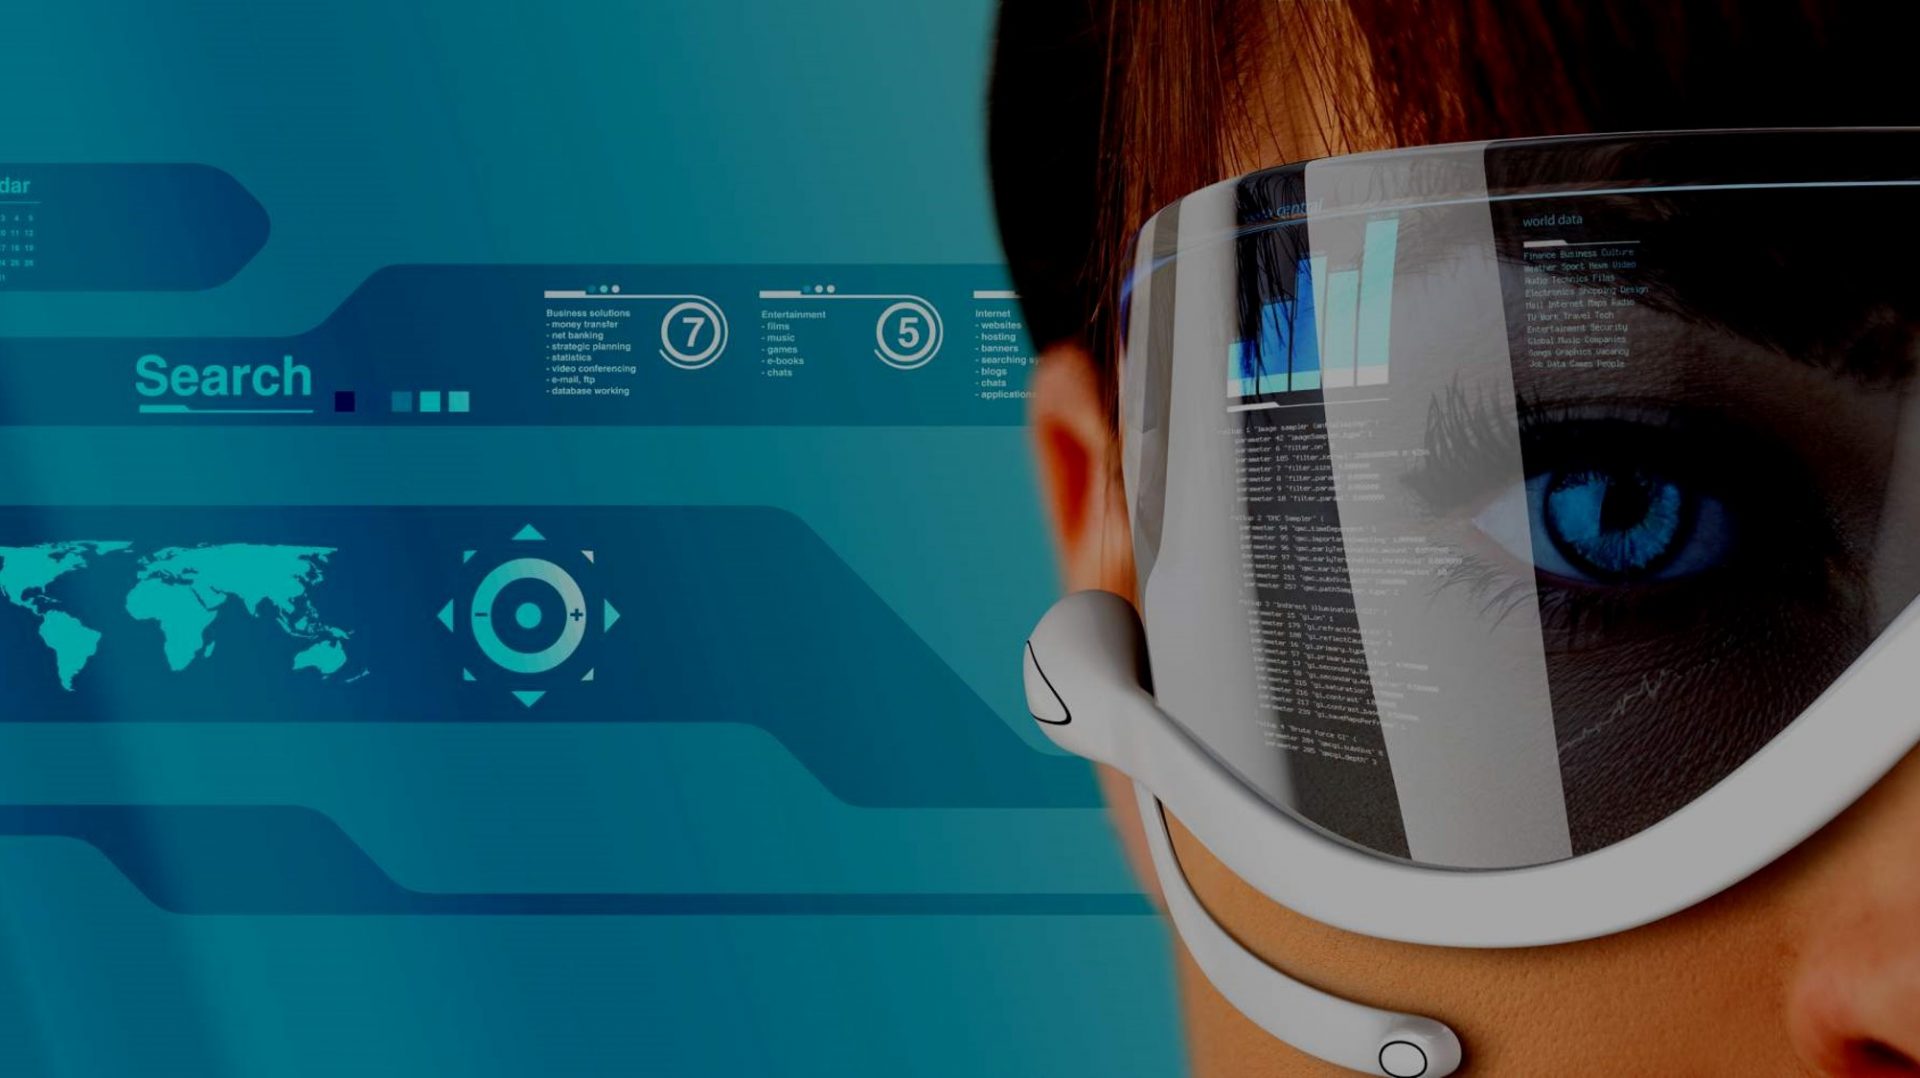 Vr презентация. VR на базе интернет-технологий. Виртуальная реальность обои. Виртуальная реальность фон для презентации. VR технологии Эстетика.